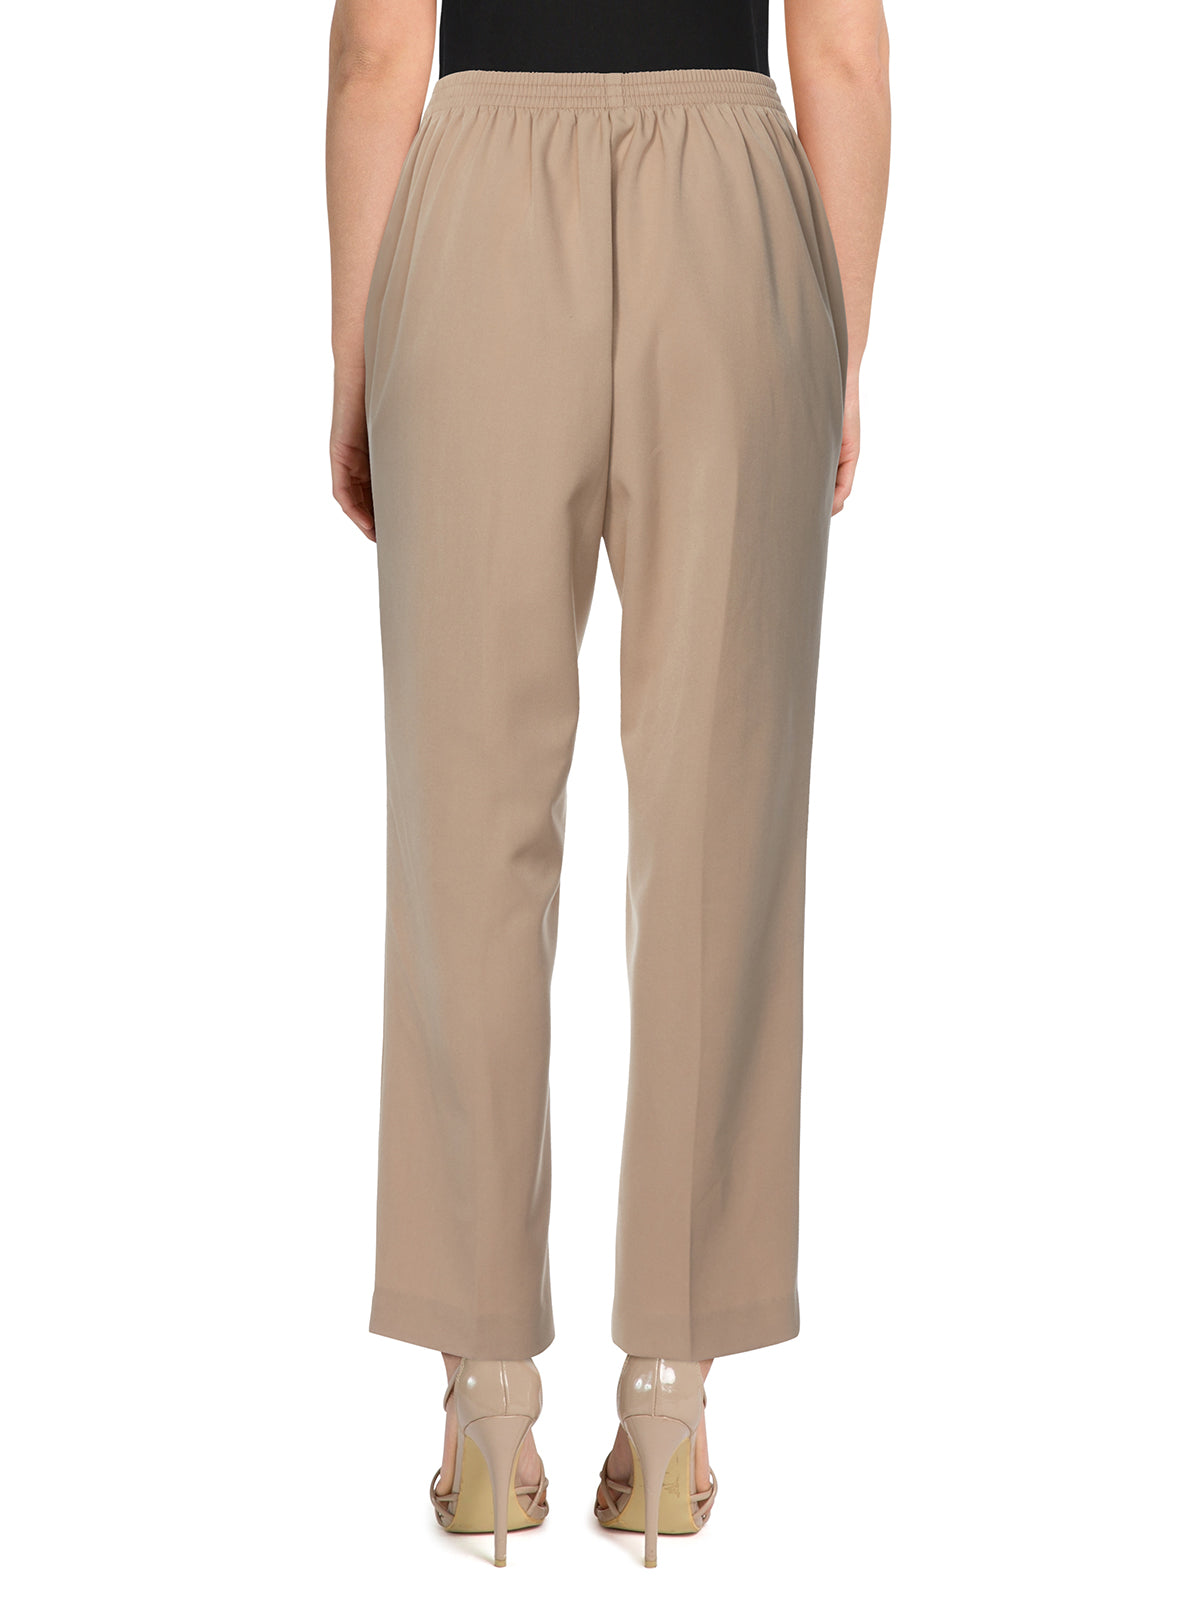 San Antonio Proportioned Short Pant Plus